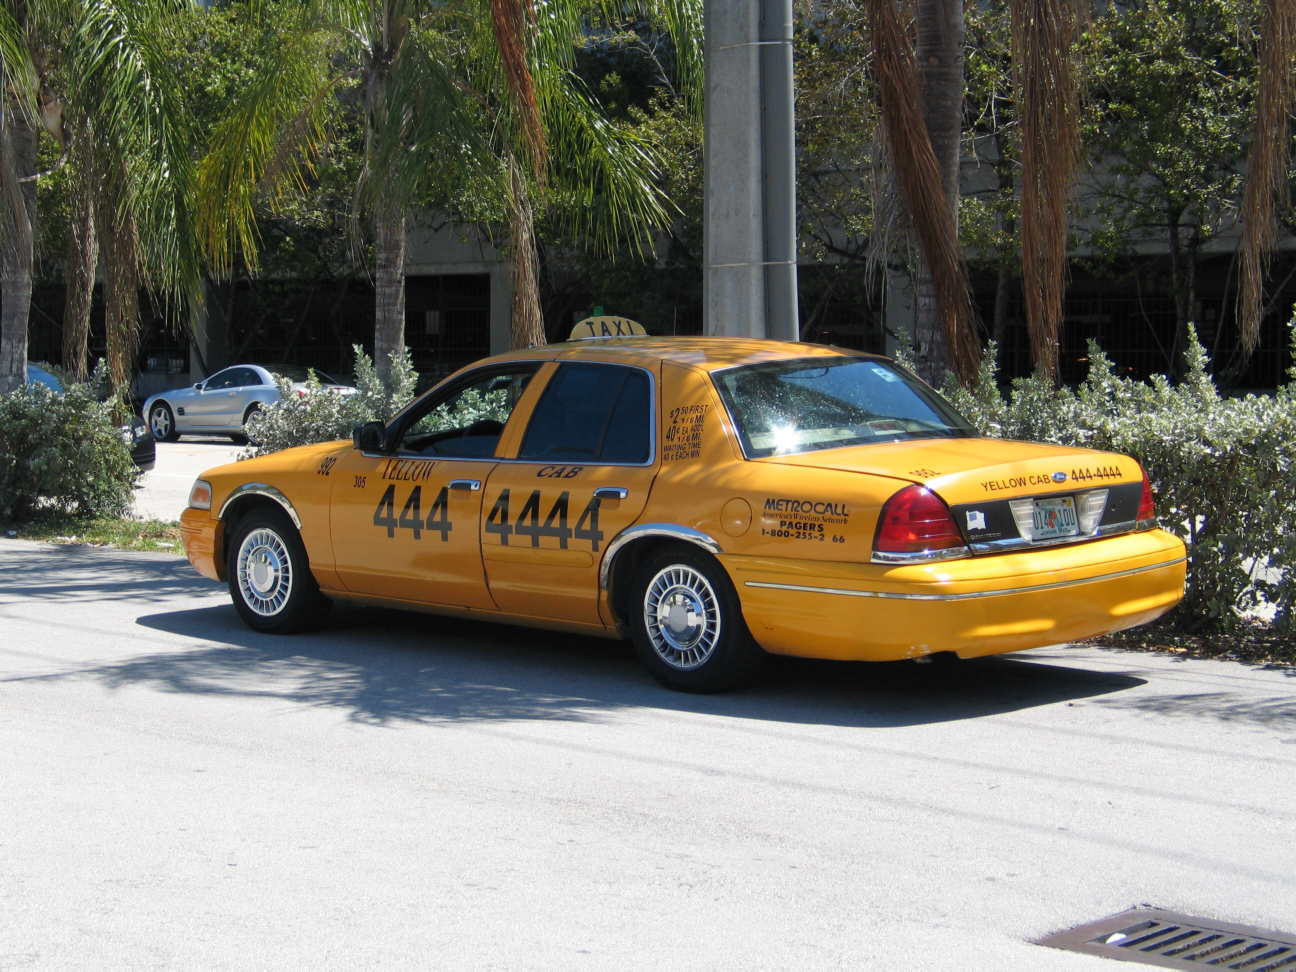 Taxi American